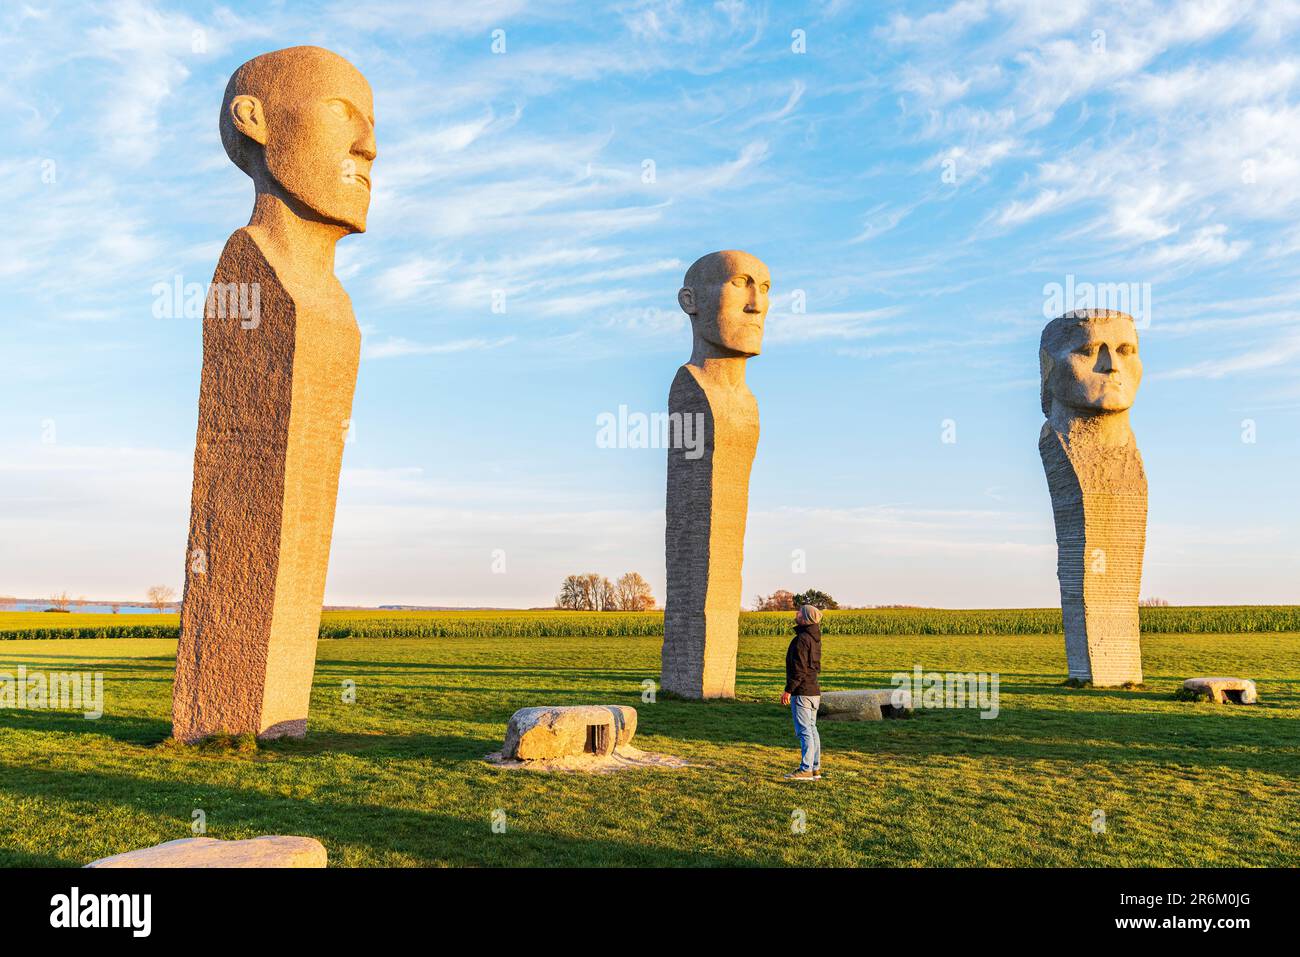 Touristen bewundern Dodekalitten Statuen bei Sonnenuntergang, Lolland Island, Region Seeland, Dänemark, Europa Stockfoto